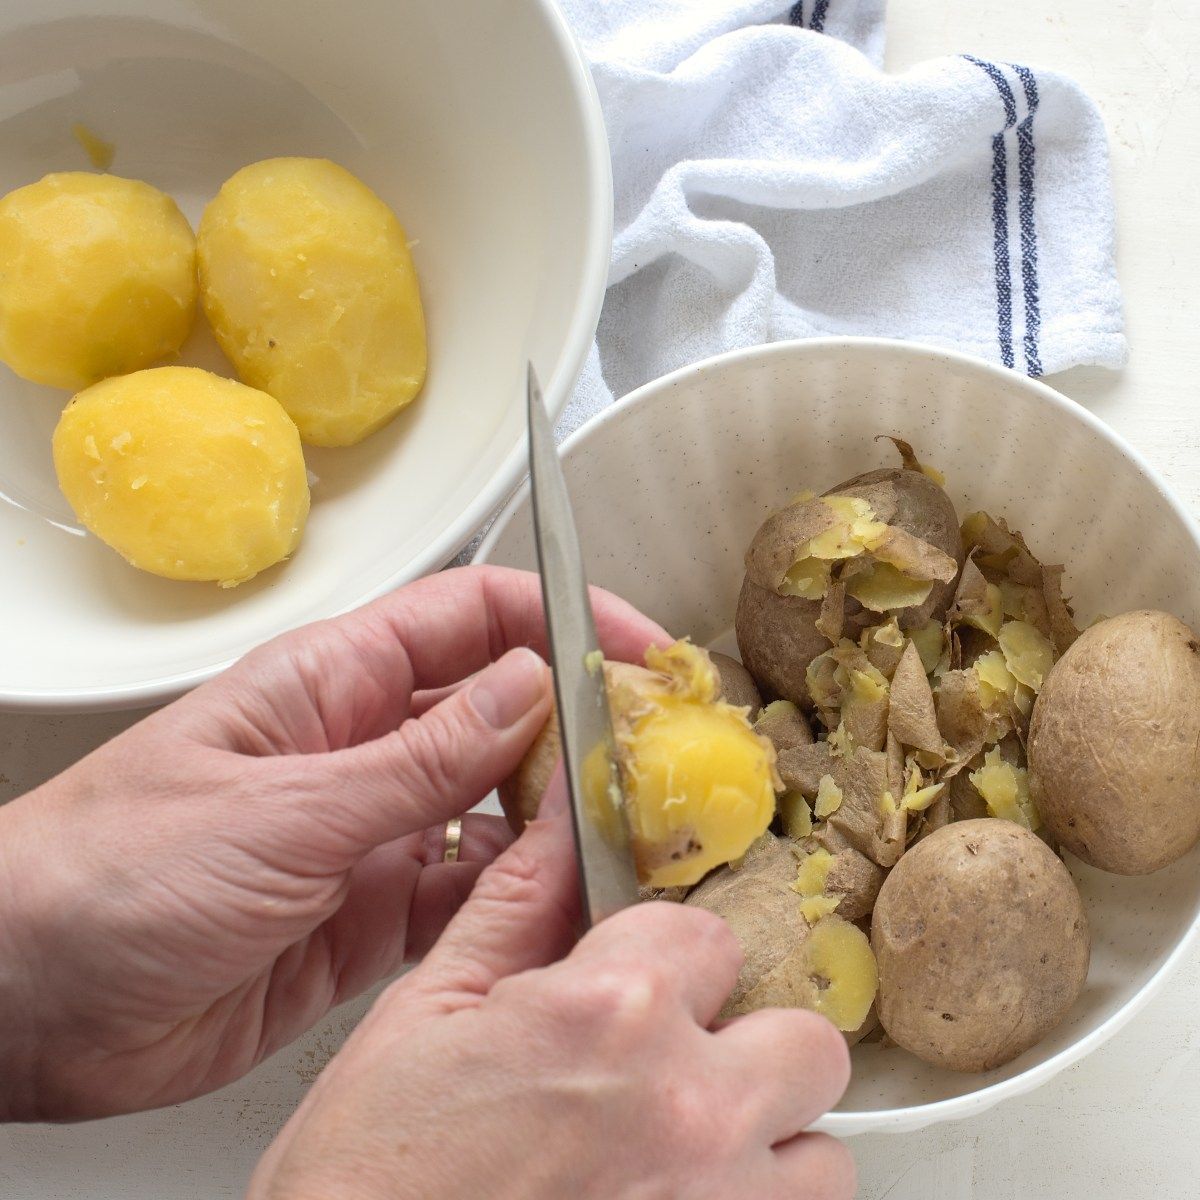 Peeling skin of boiled potatoes.